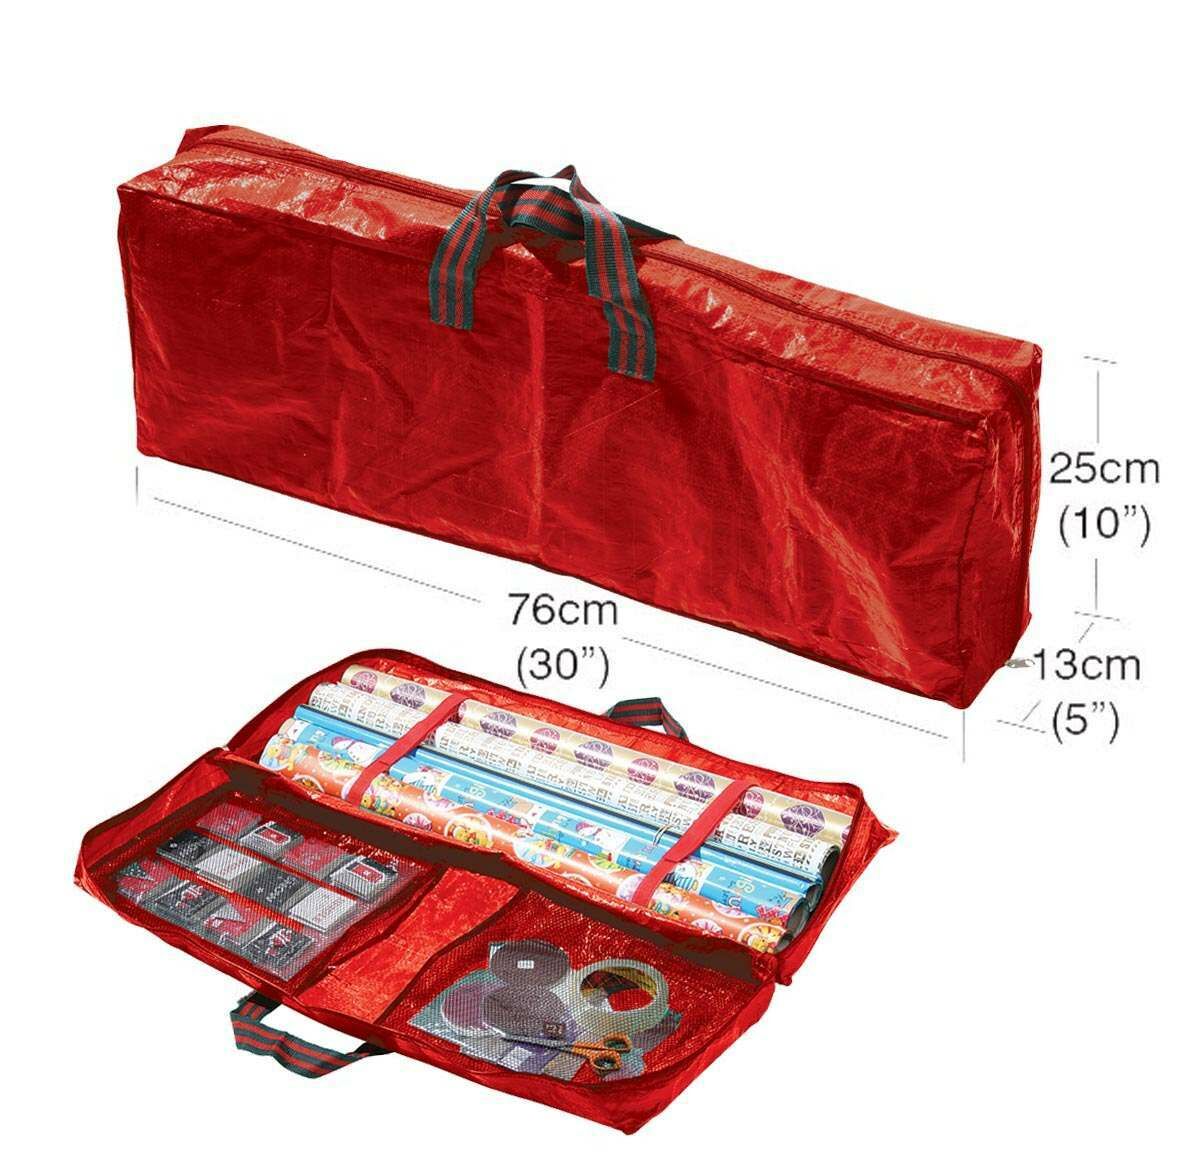 76cm Gift Wrap Storage Bag image 3